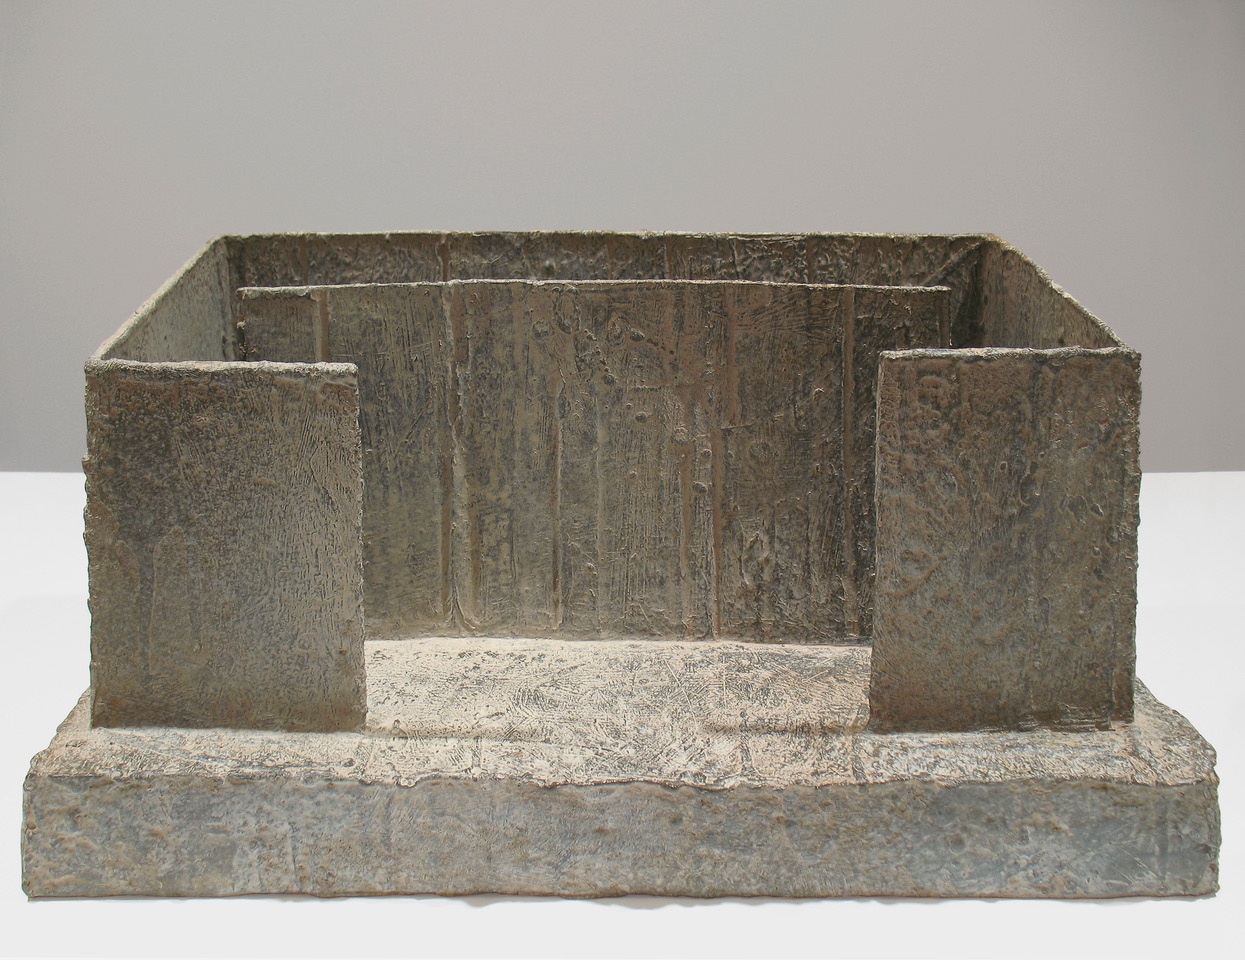 Enclosure, 2008, cast bronze, 9 1/2 x 18 1/2 x 9 1/2 inches, edition 1/3; 1AP